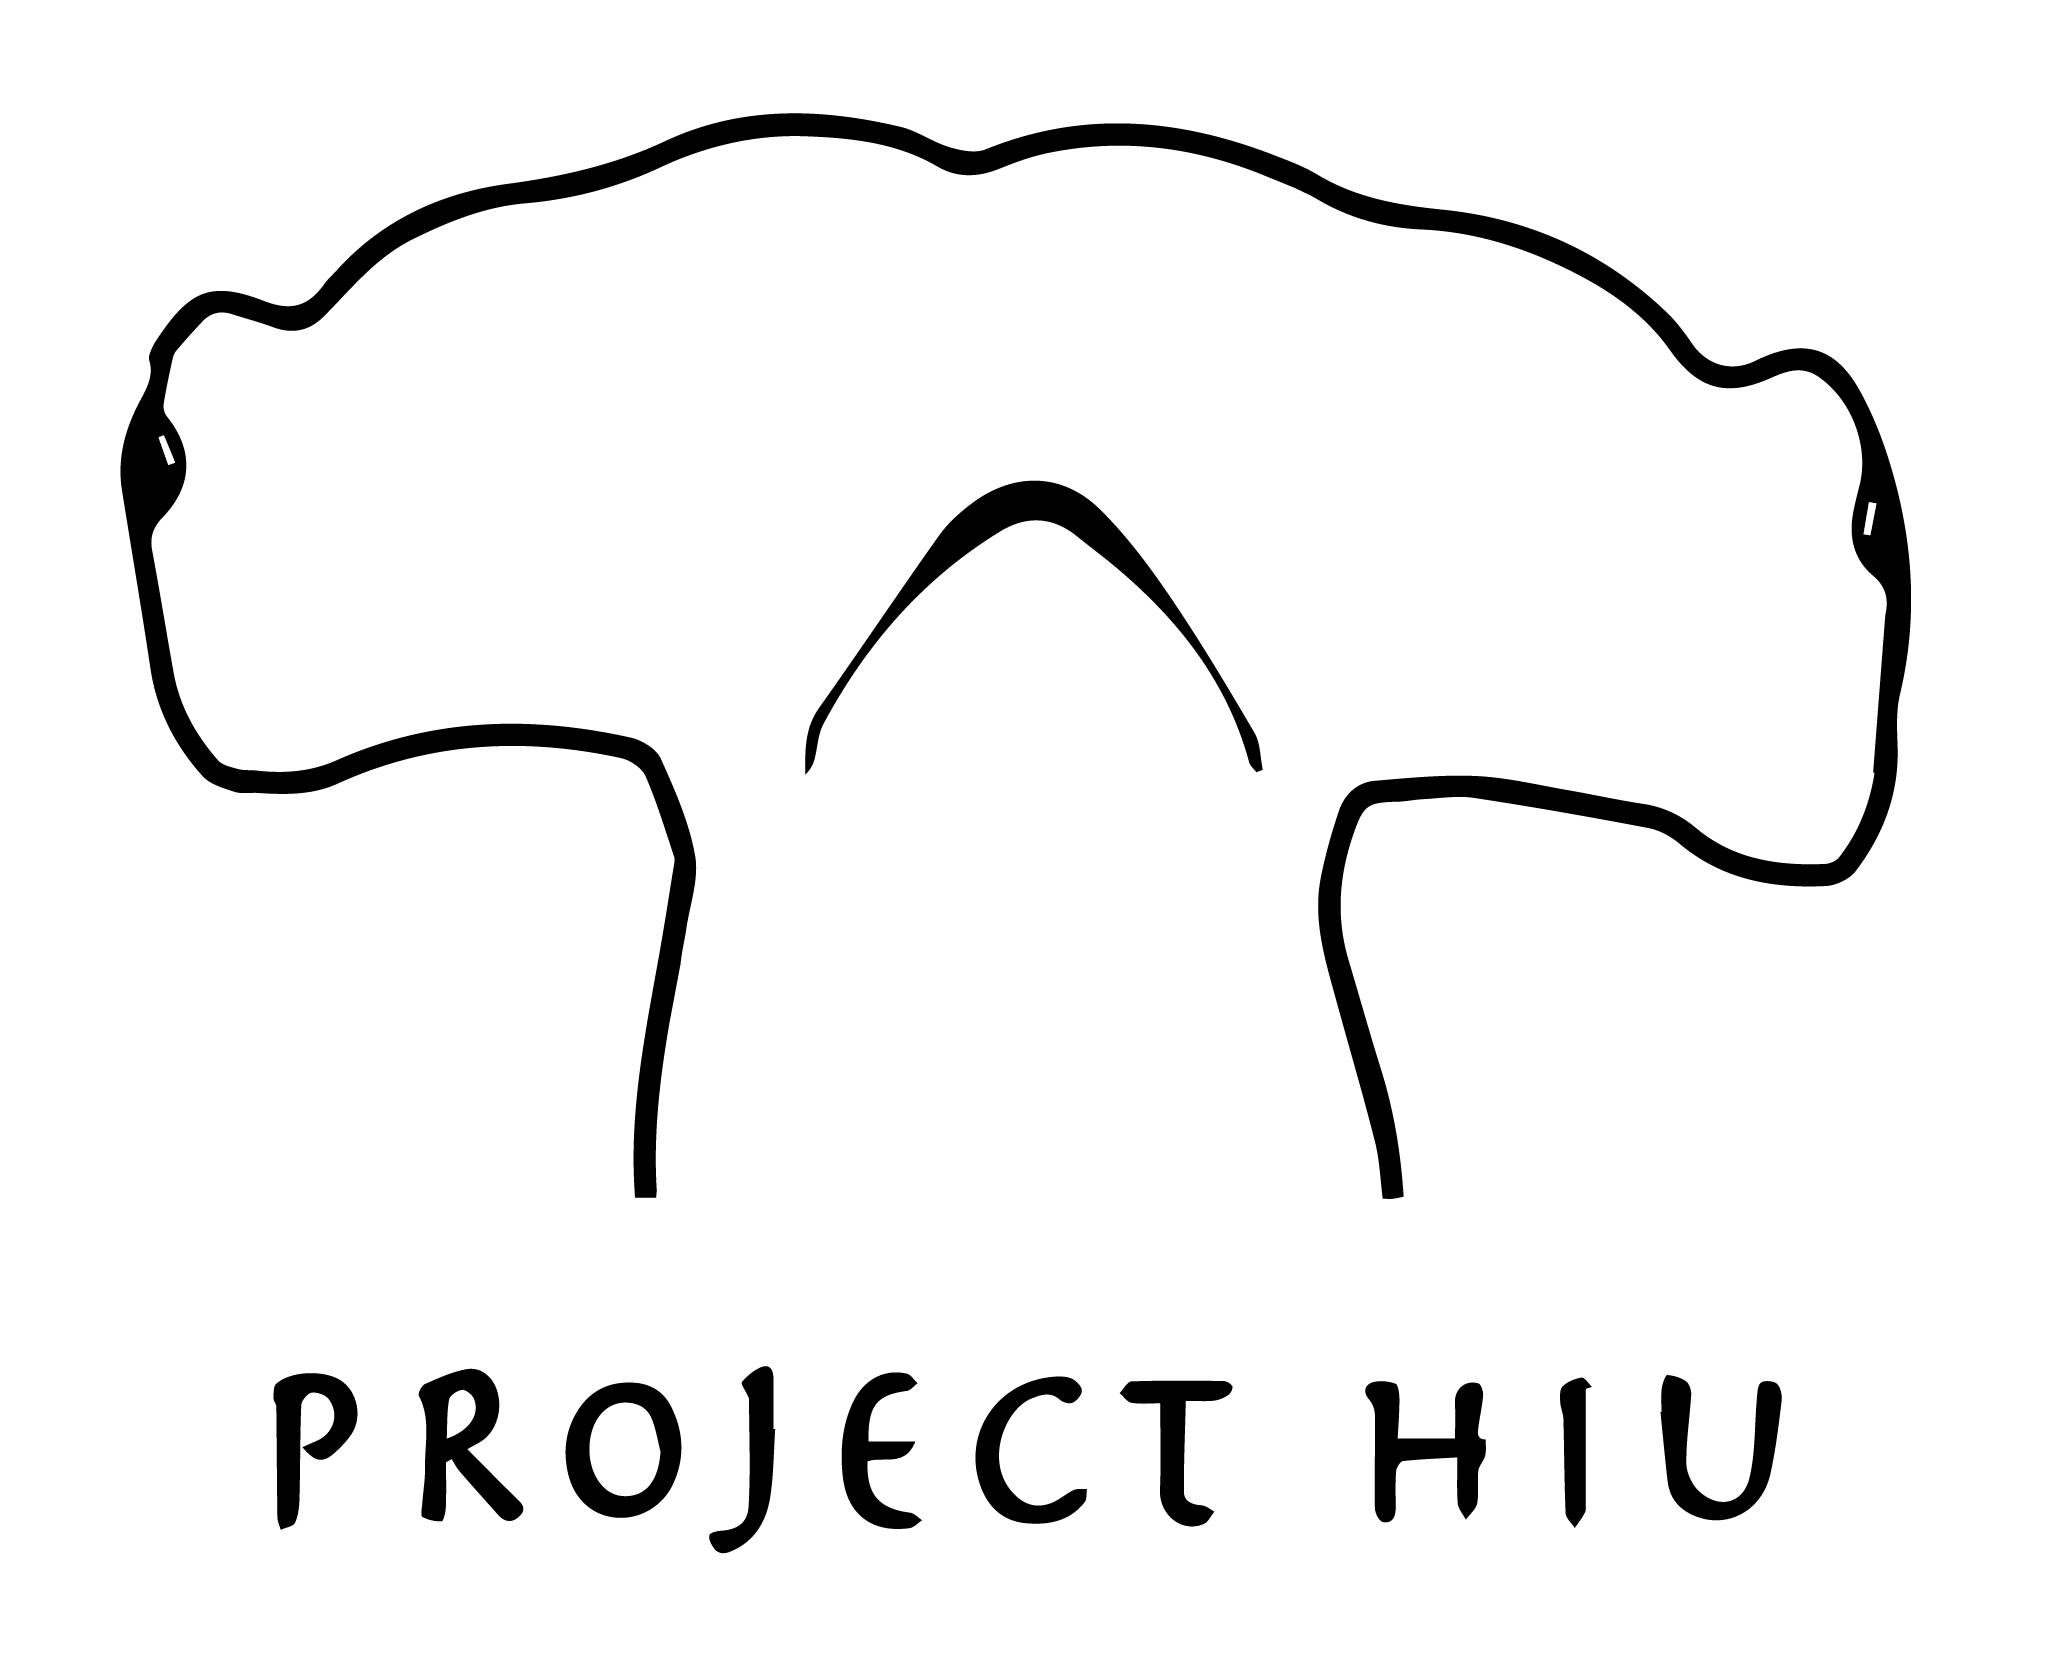 Project Hiu logo